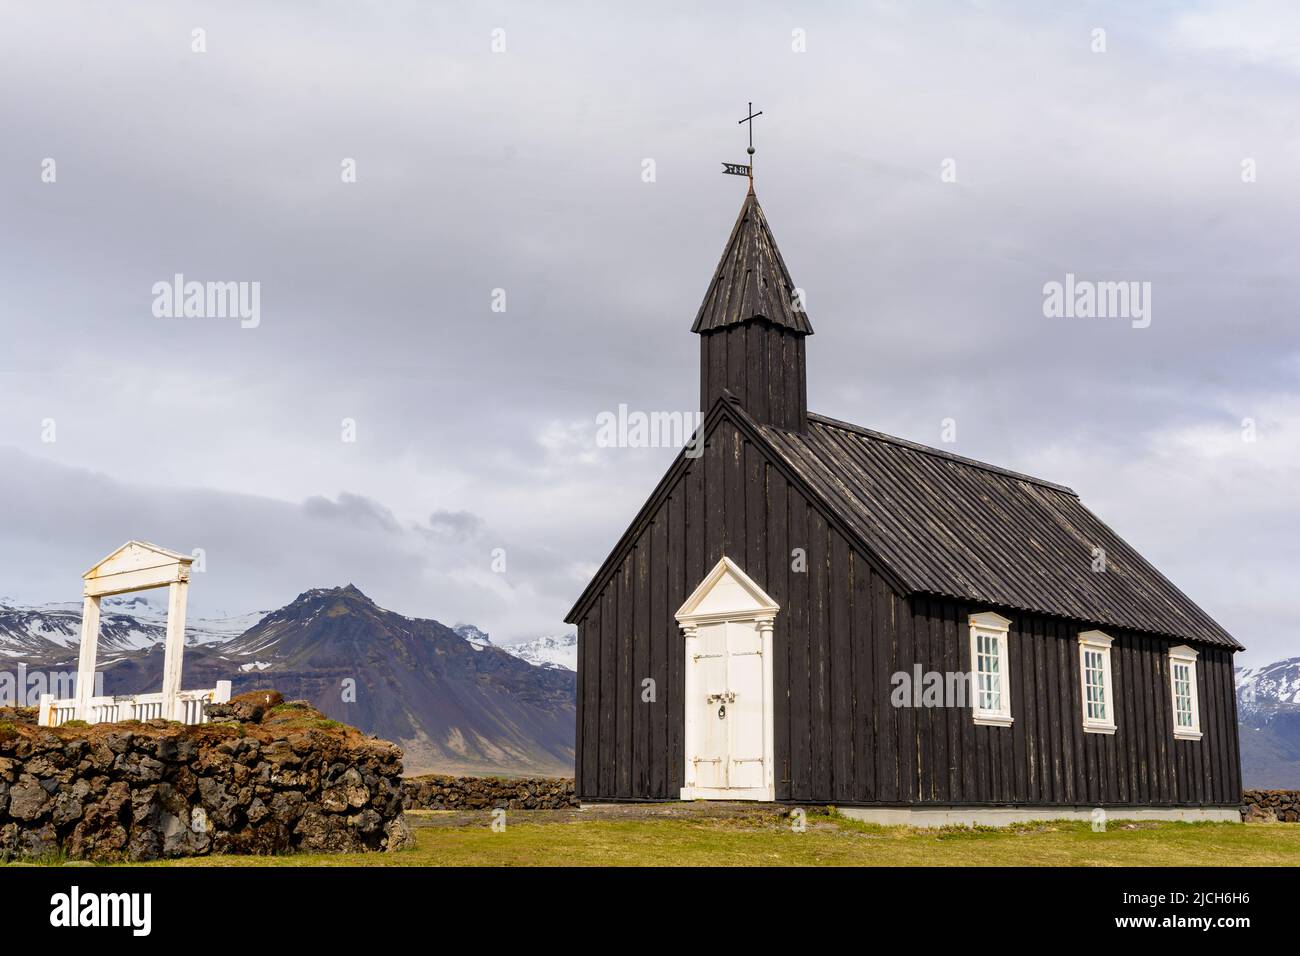 Iglesia de madera negra en Islandia. Foto de stock